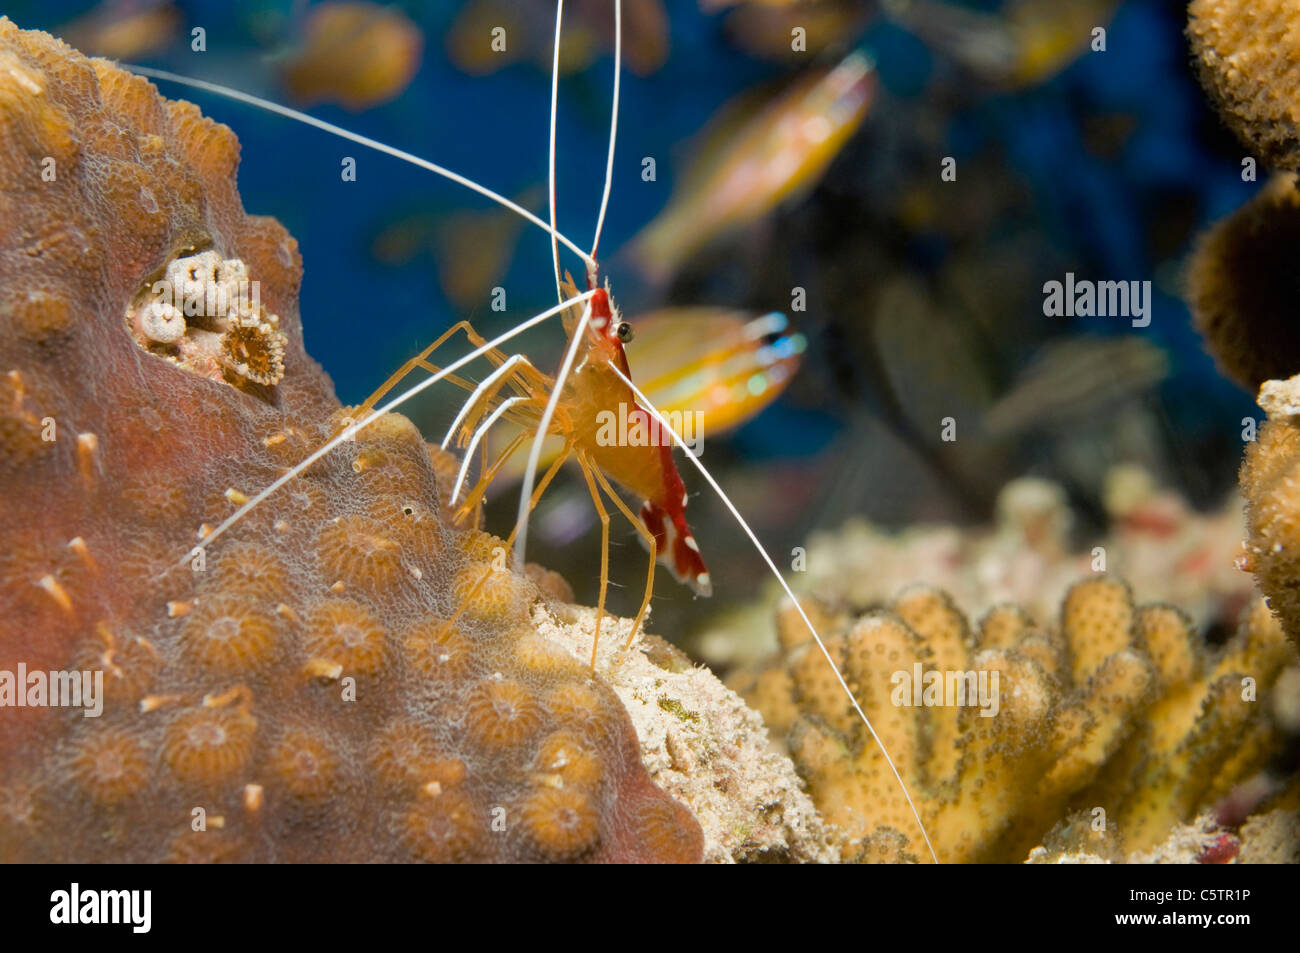 Egypt, Red Sea, Cleaner shrimp (Lysmata amboinesis), close-up Stock Photo